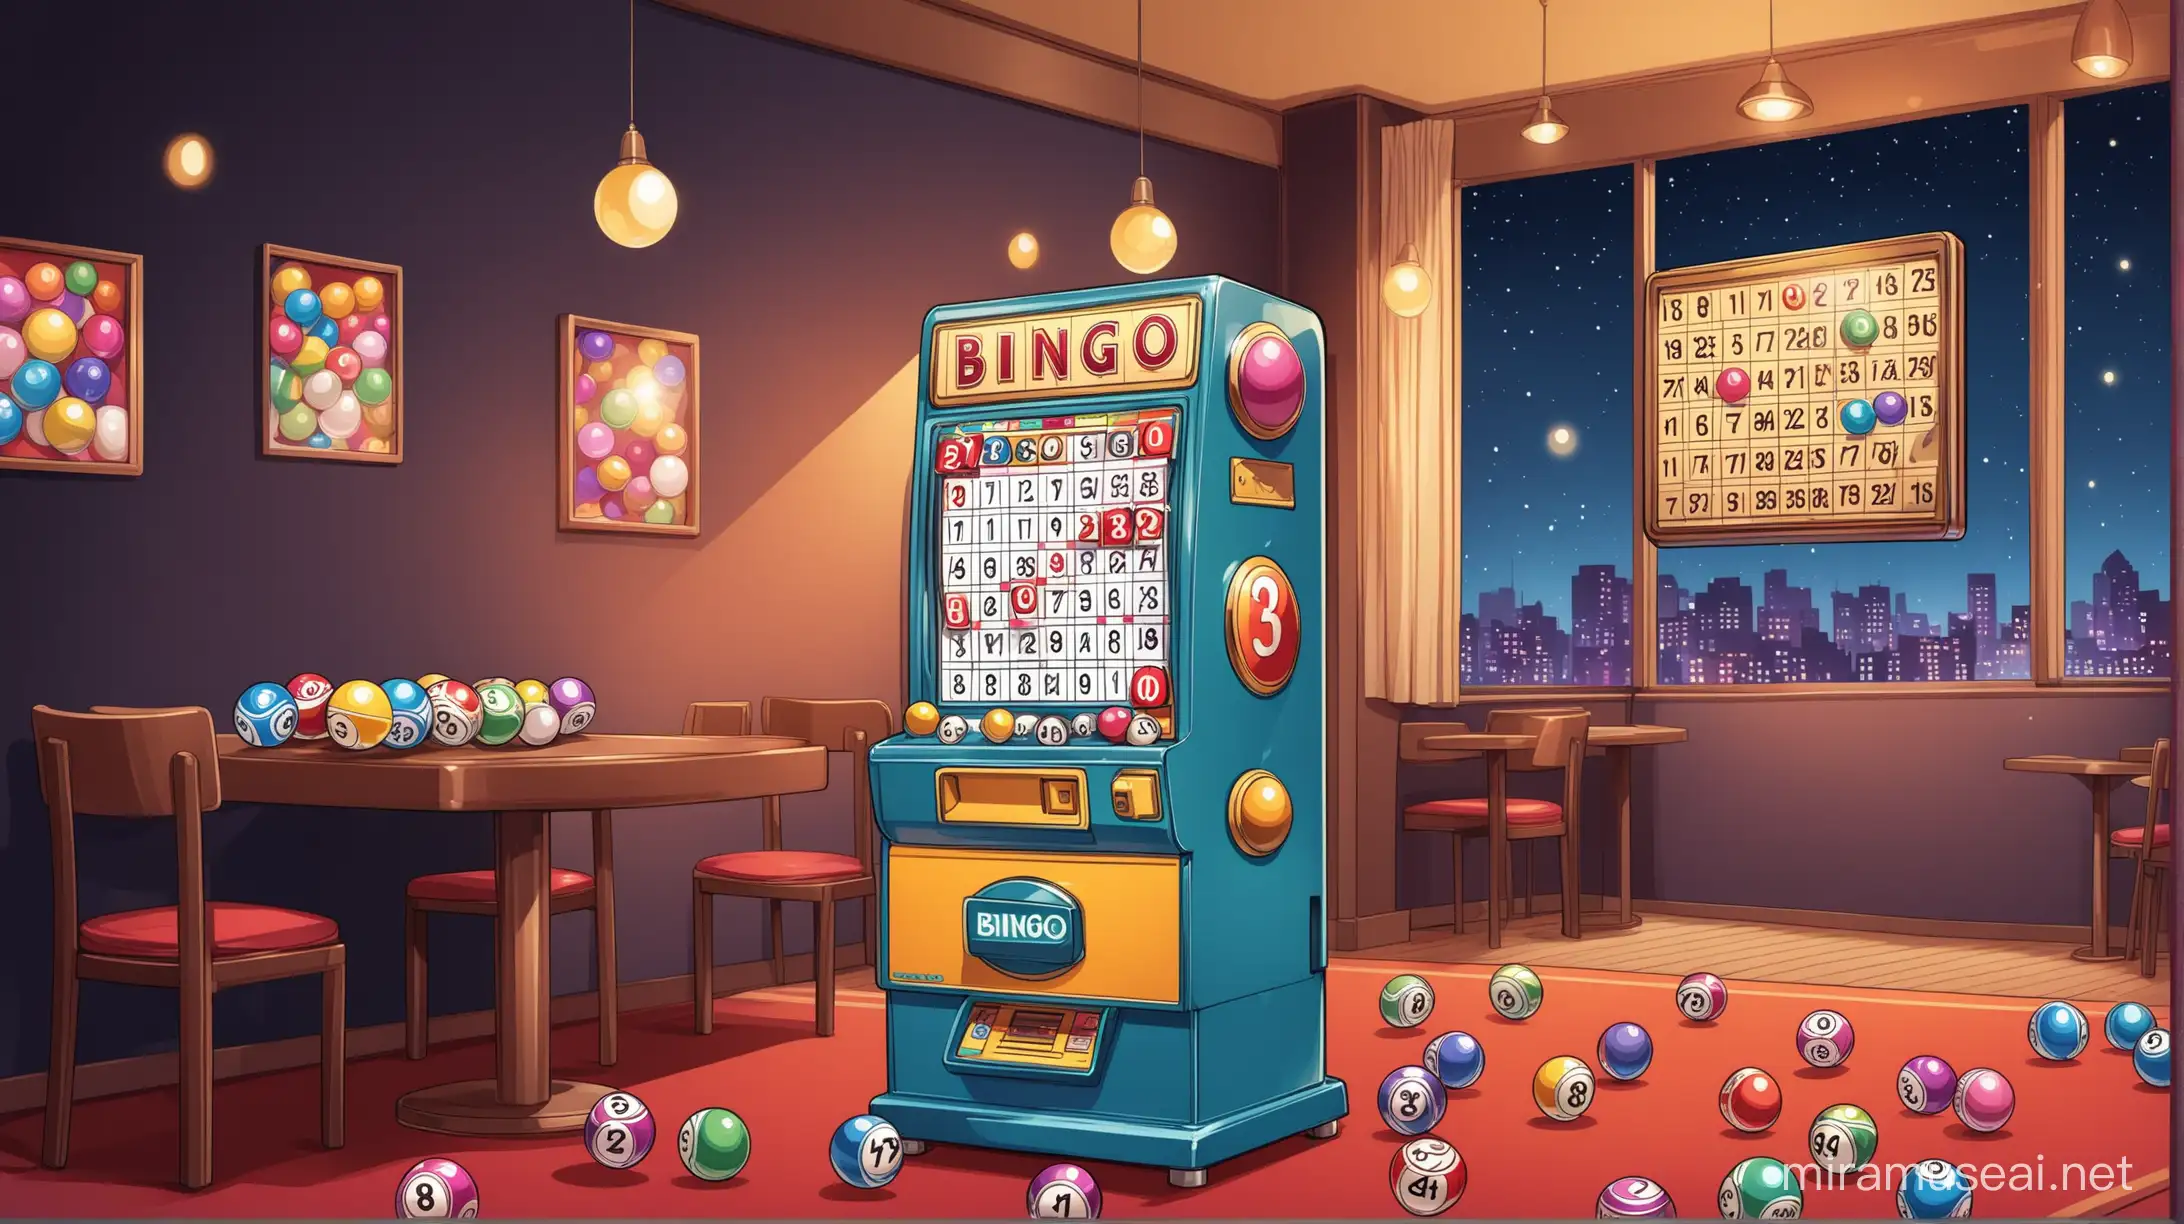 Bingo balls flying minimalistic  spread illustration in the environment, bingo machine in the room corner, with room accessories indoor night background cartoonist images